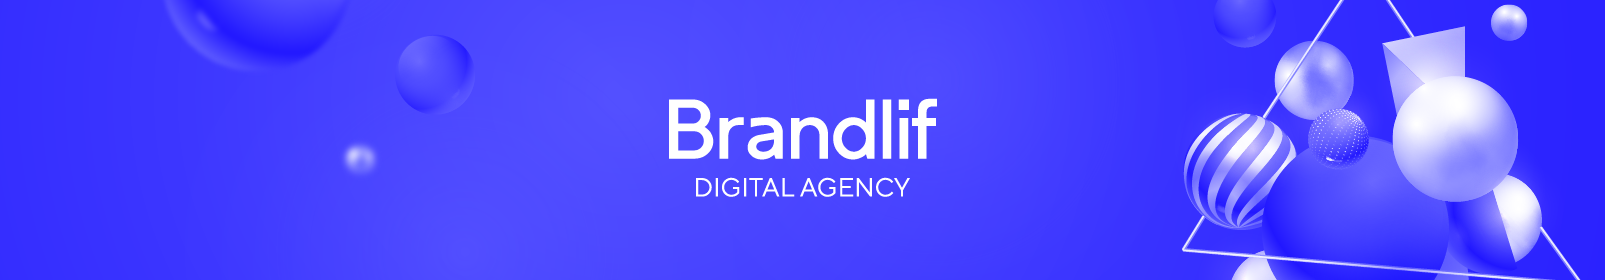 Brandlif Digital Agency's profile banner